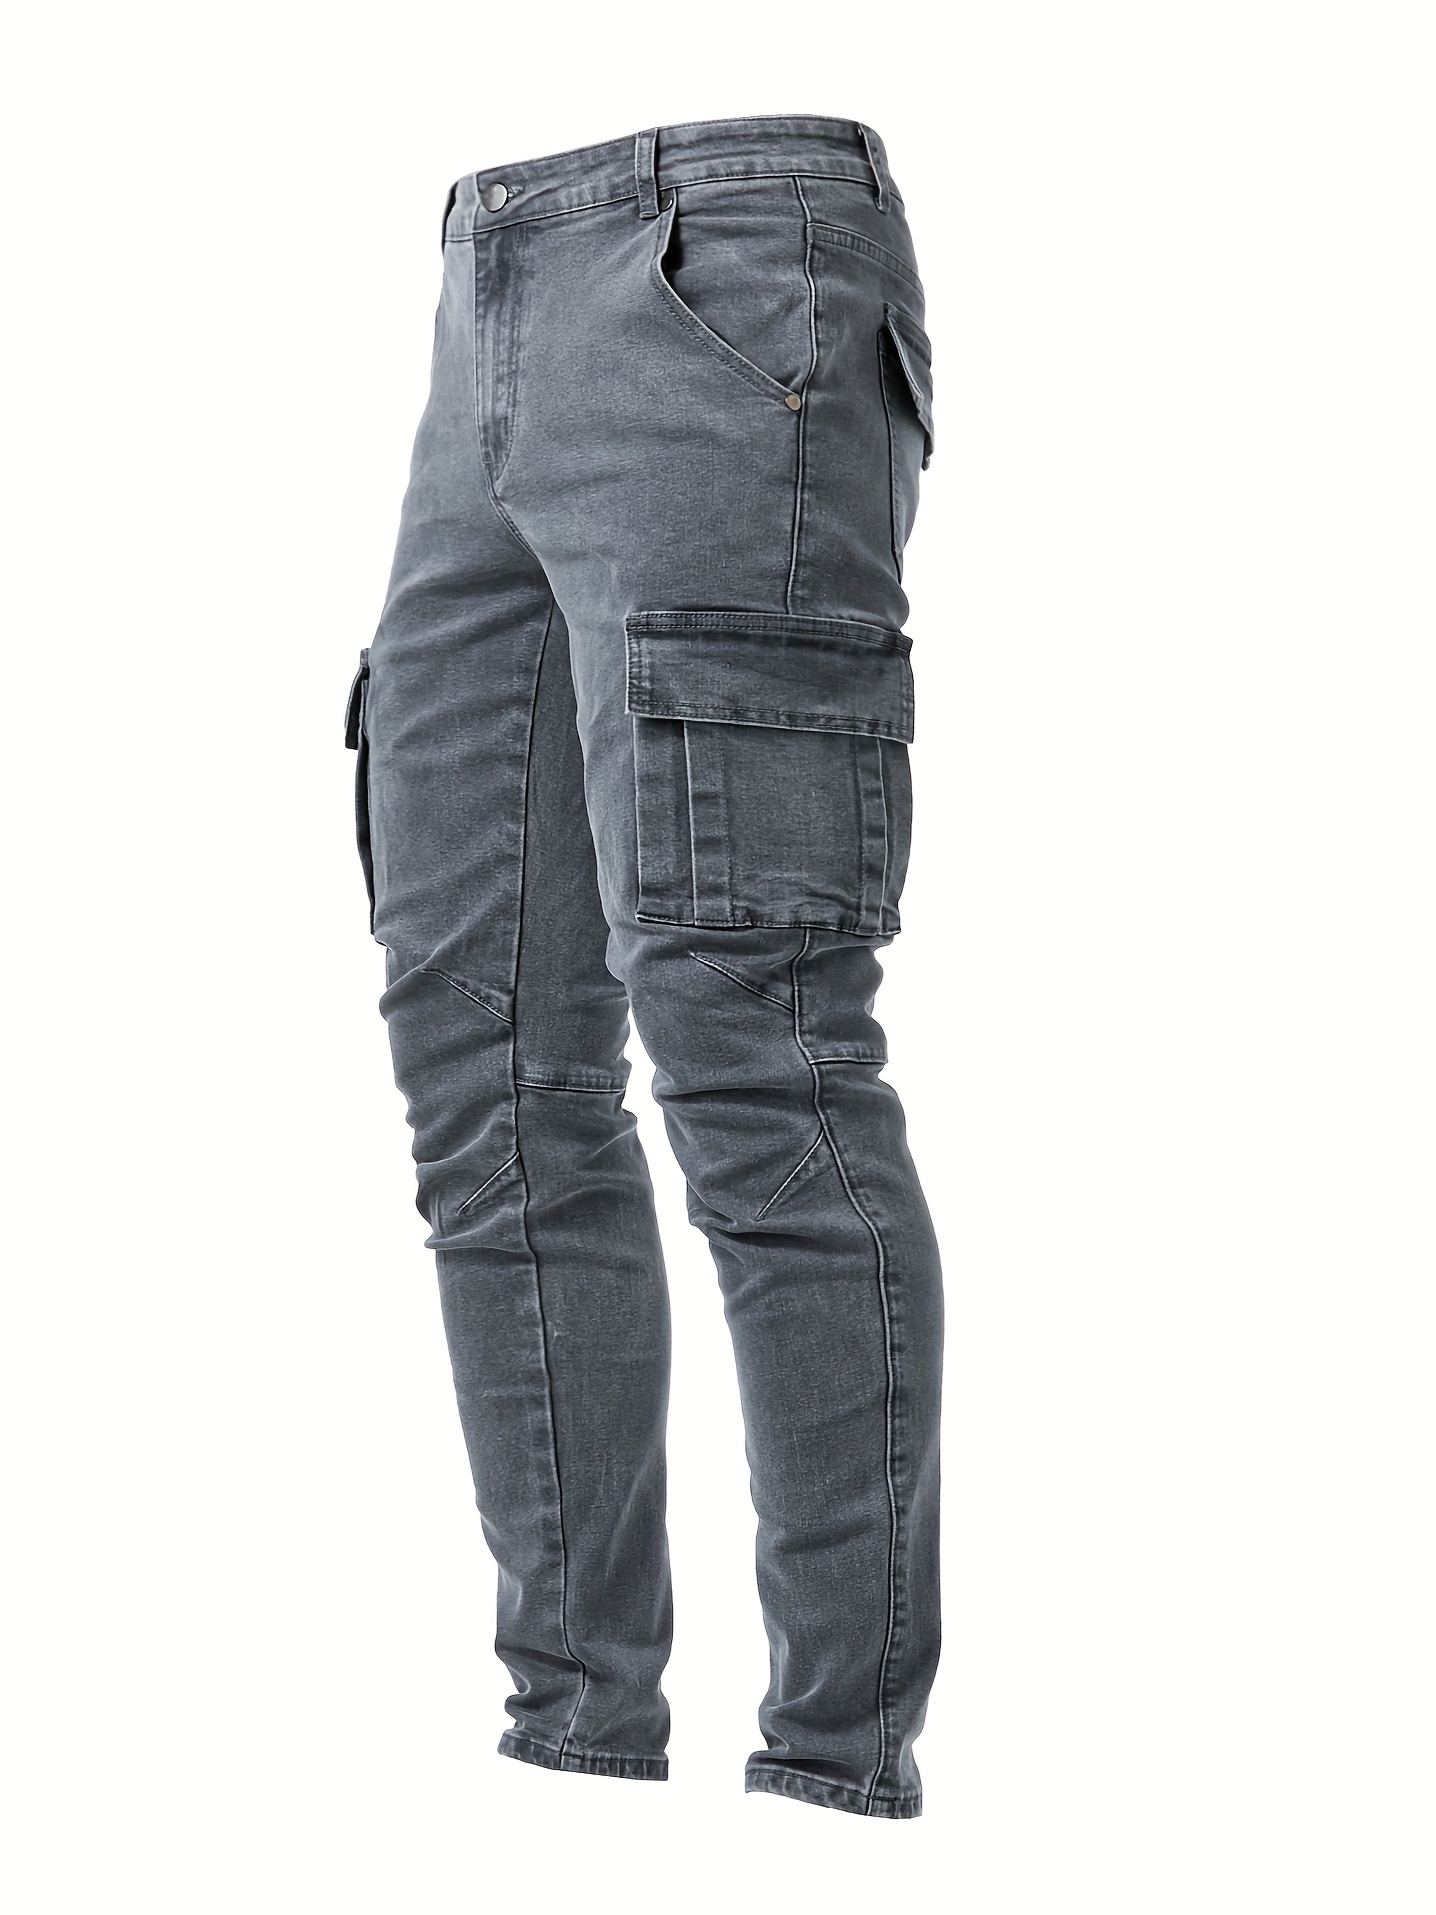 Skinny slim fit cargo jeans for men